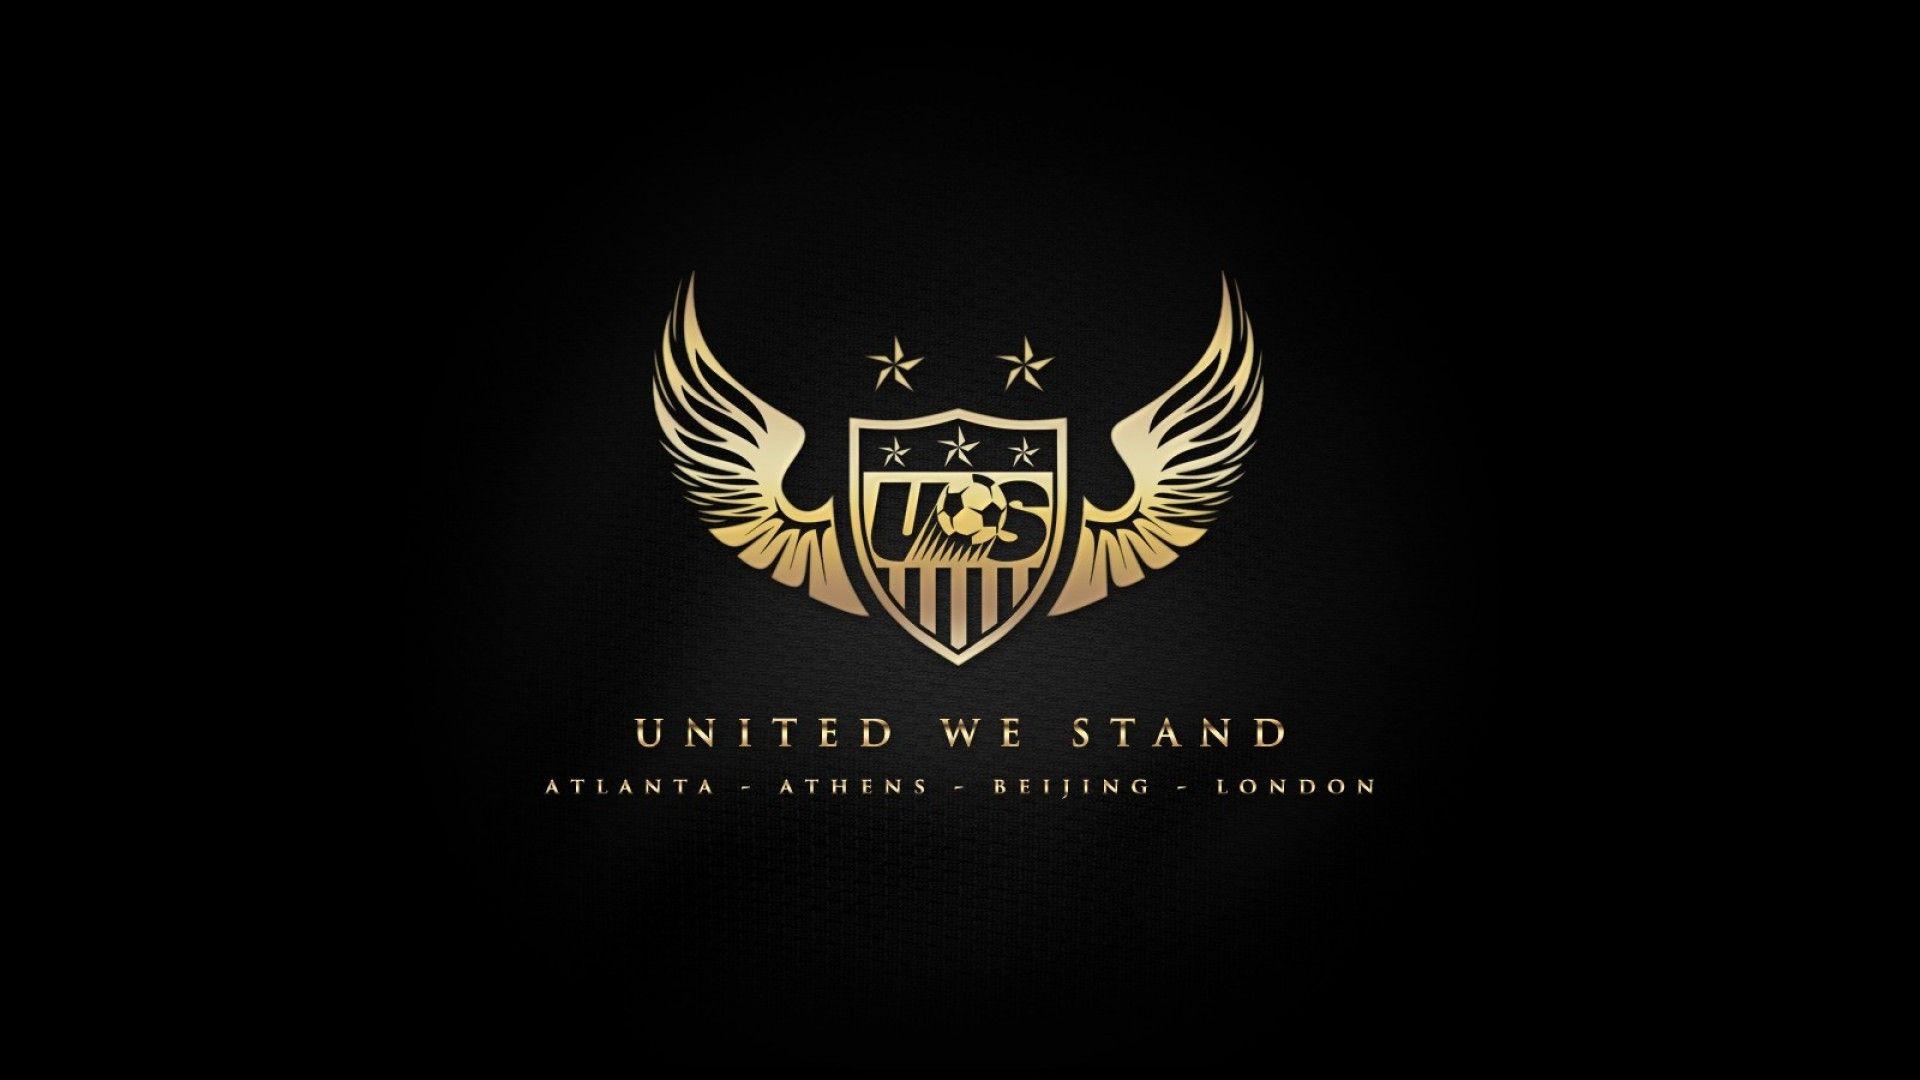 Usa Soccer Logo Wallpaper